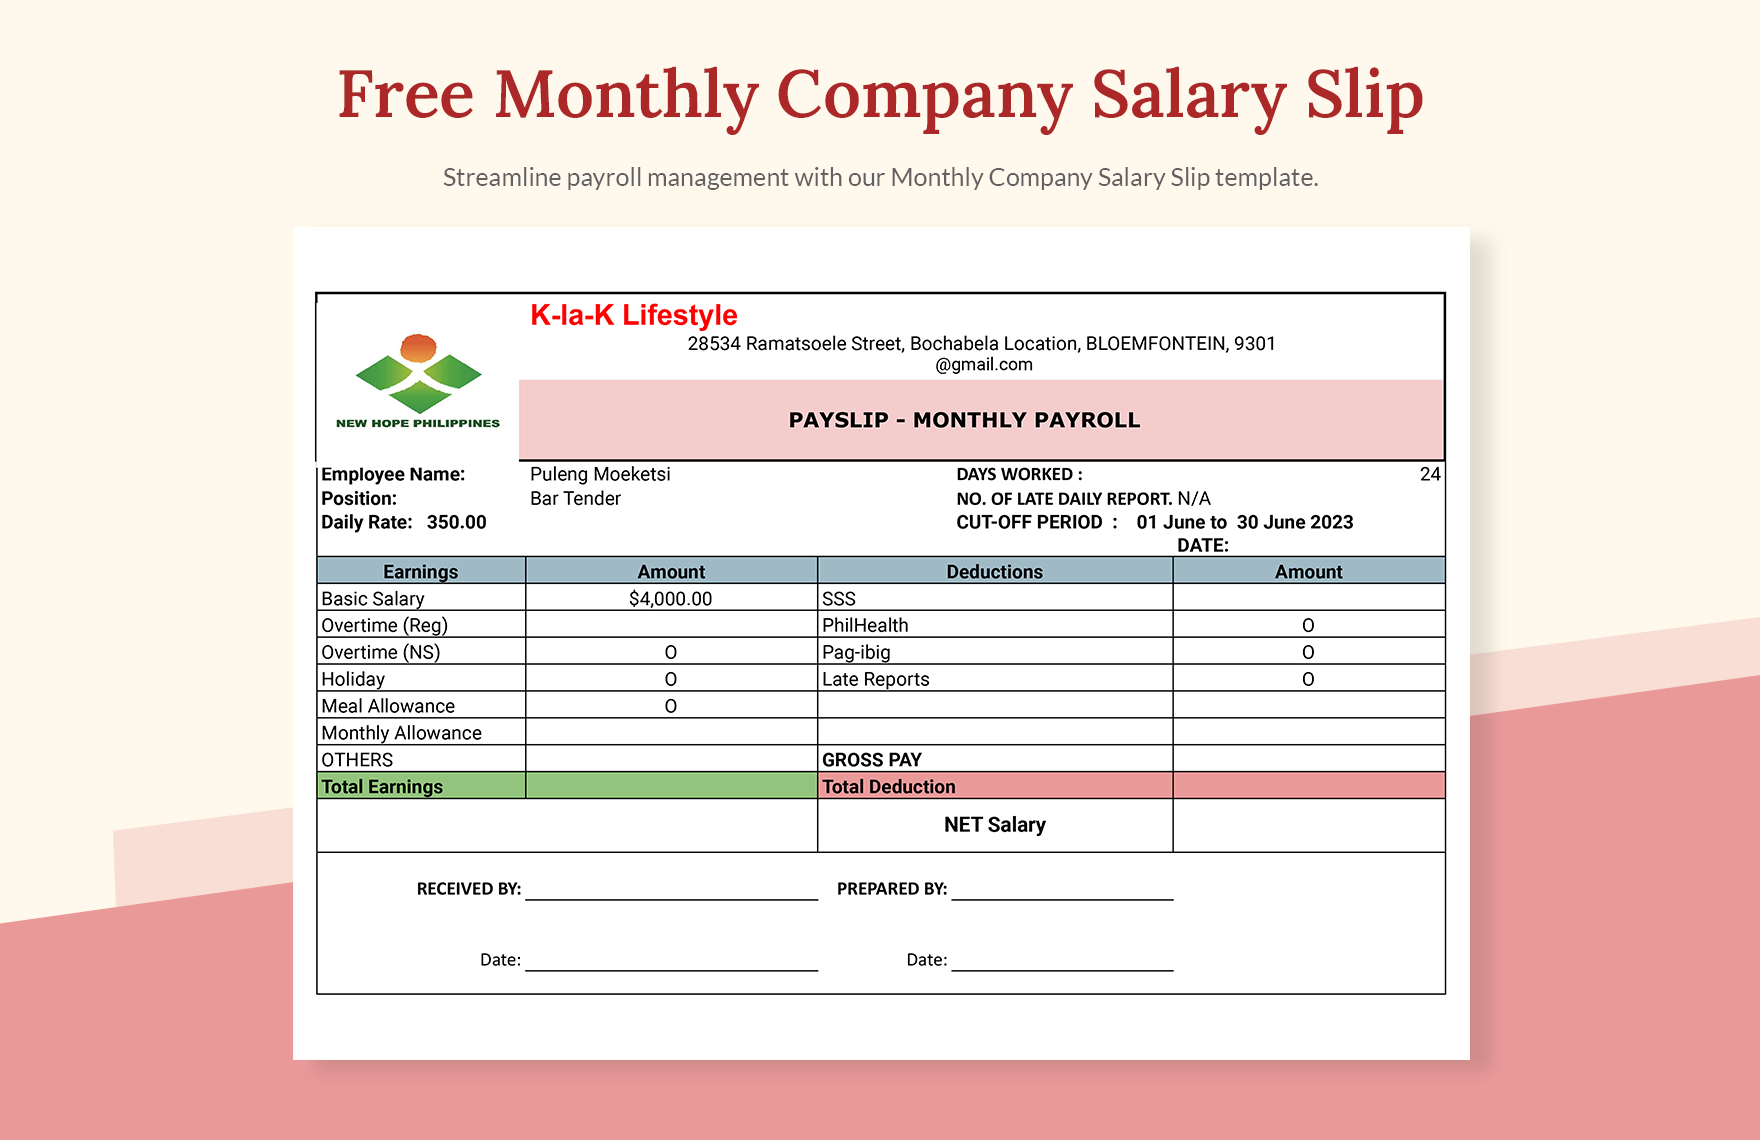 Monthly Company Salary Slip